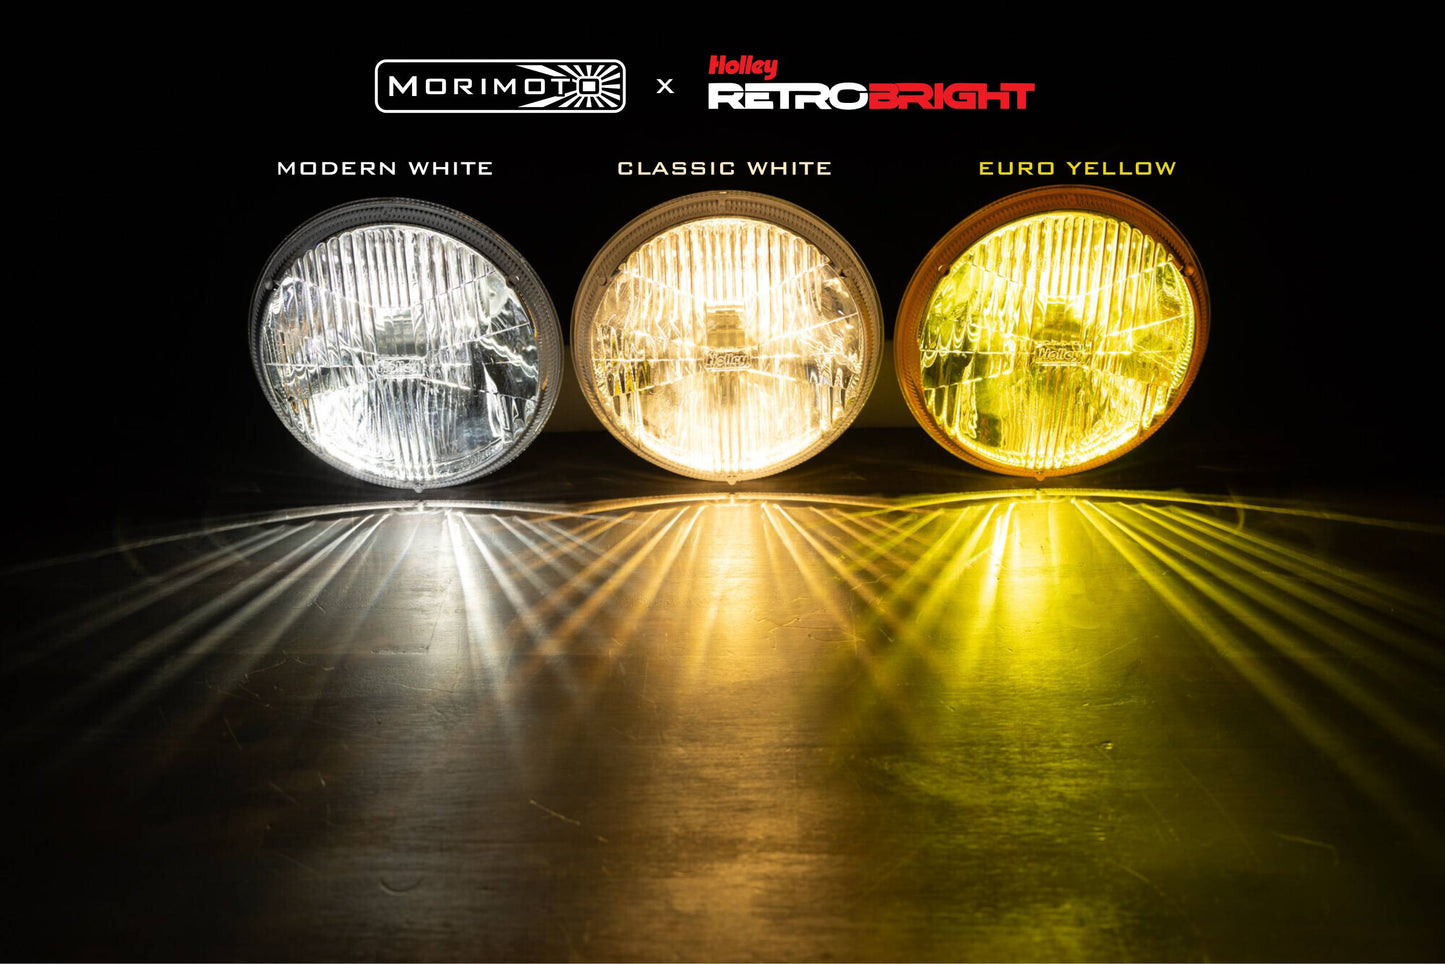 Holley RetroBright Headlight: Euro Yellow (5.75" Round)